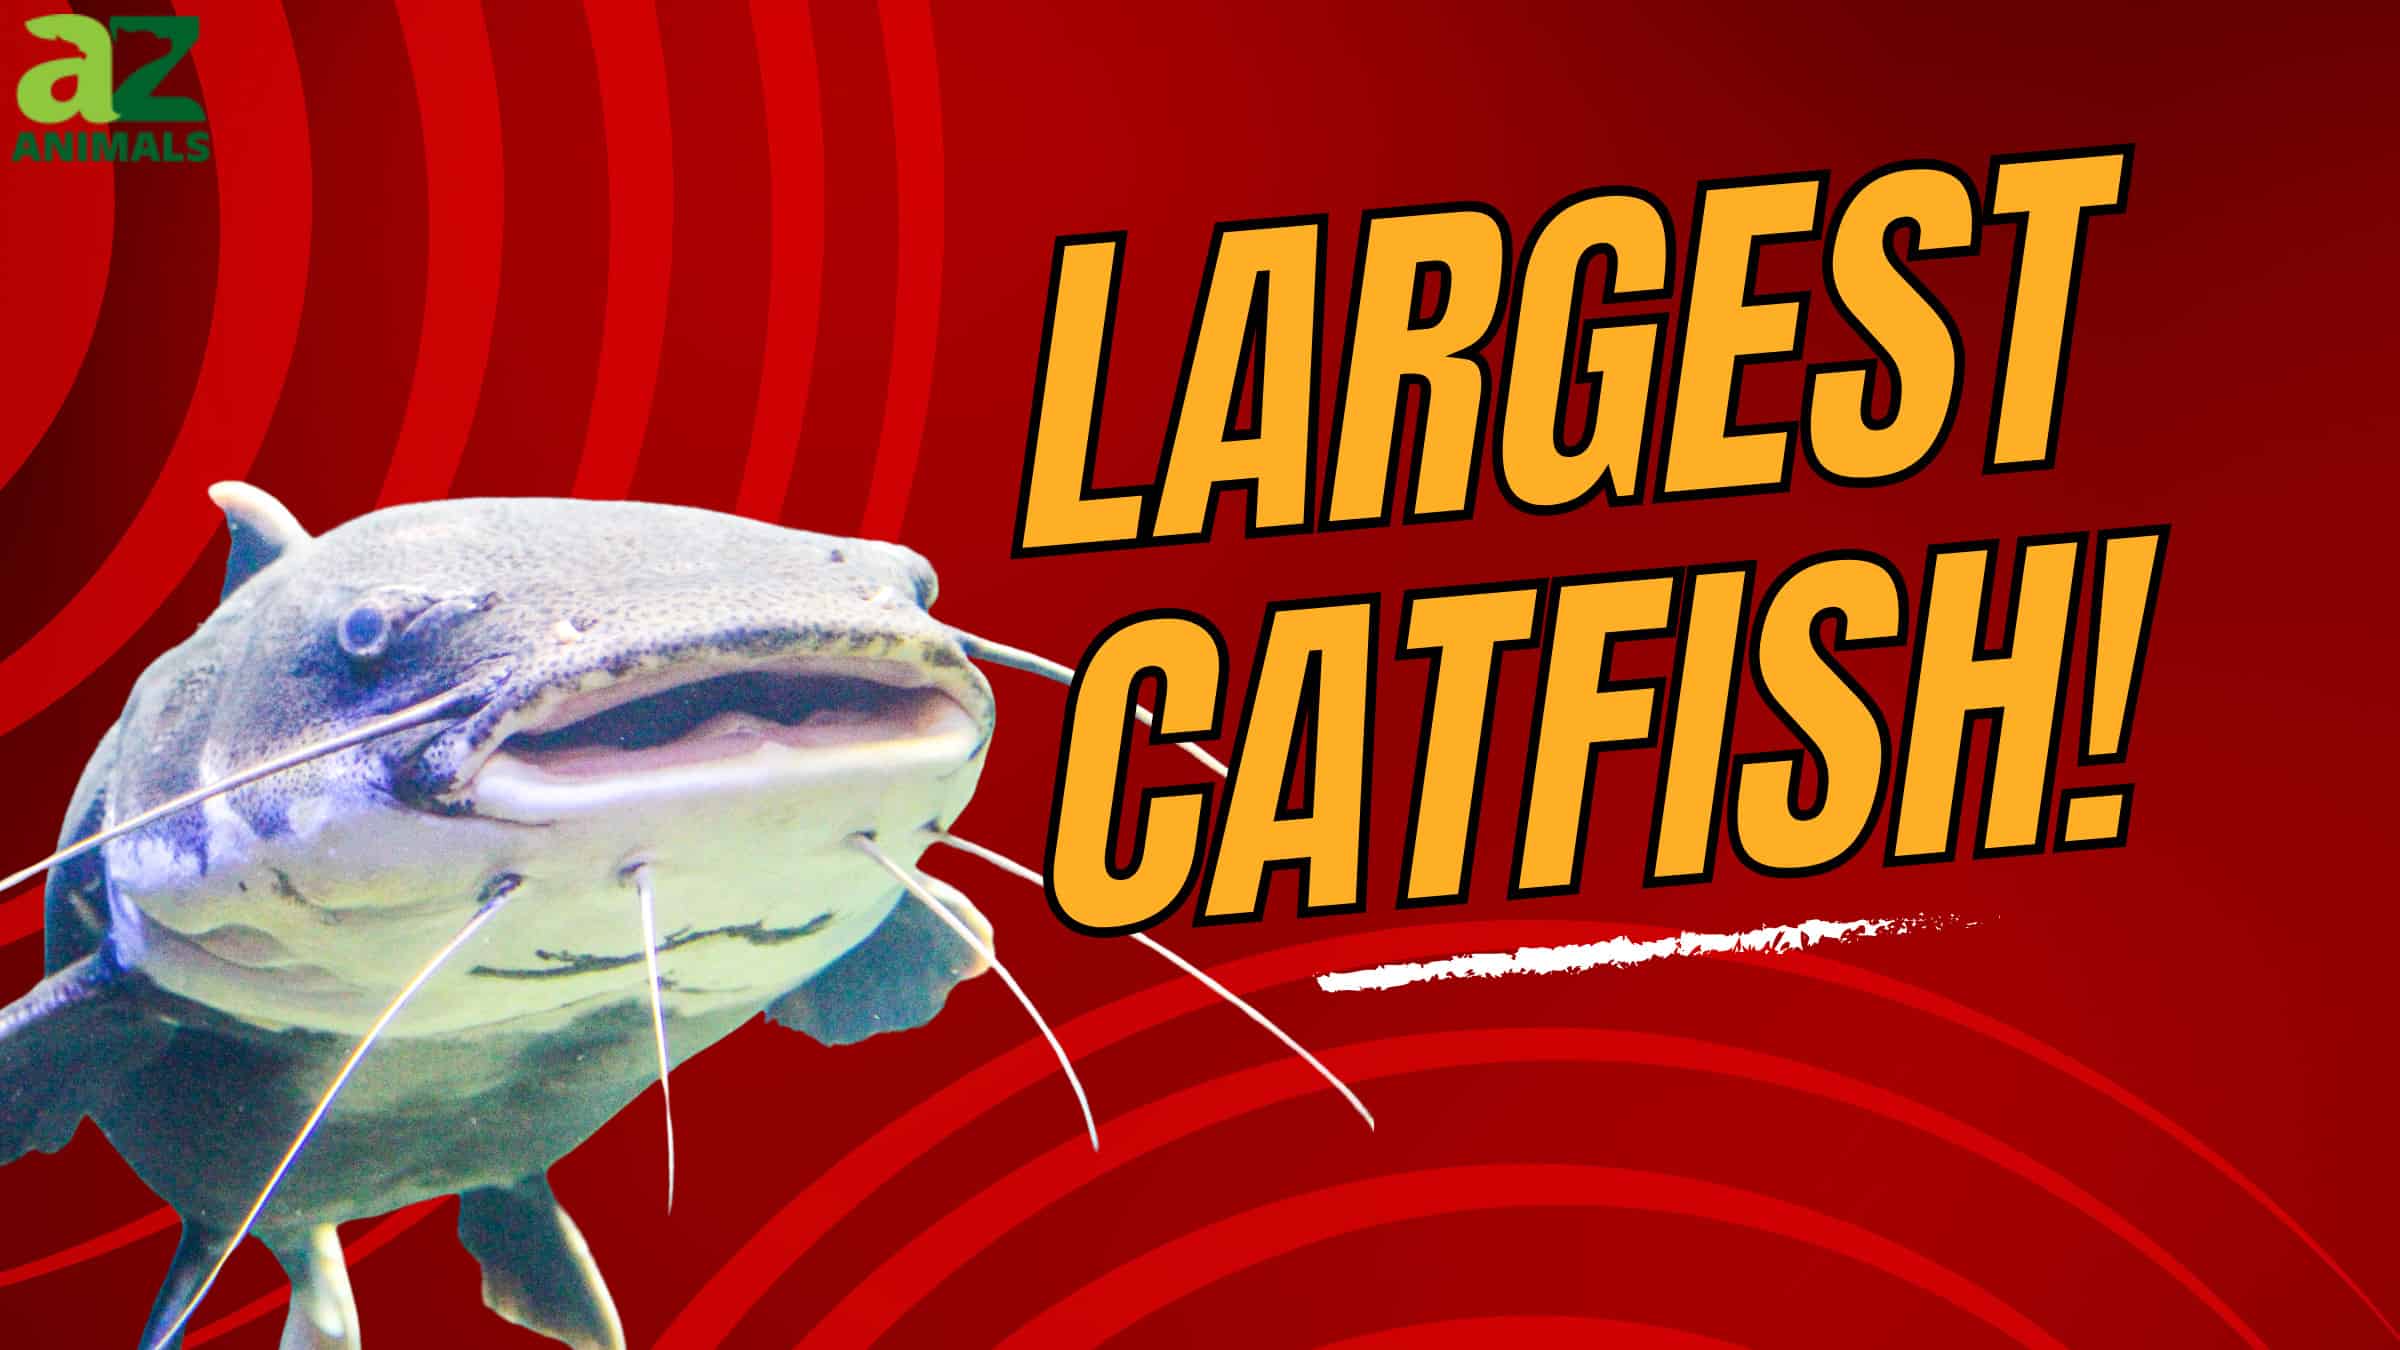 Largest Catfish in OK